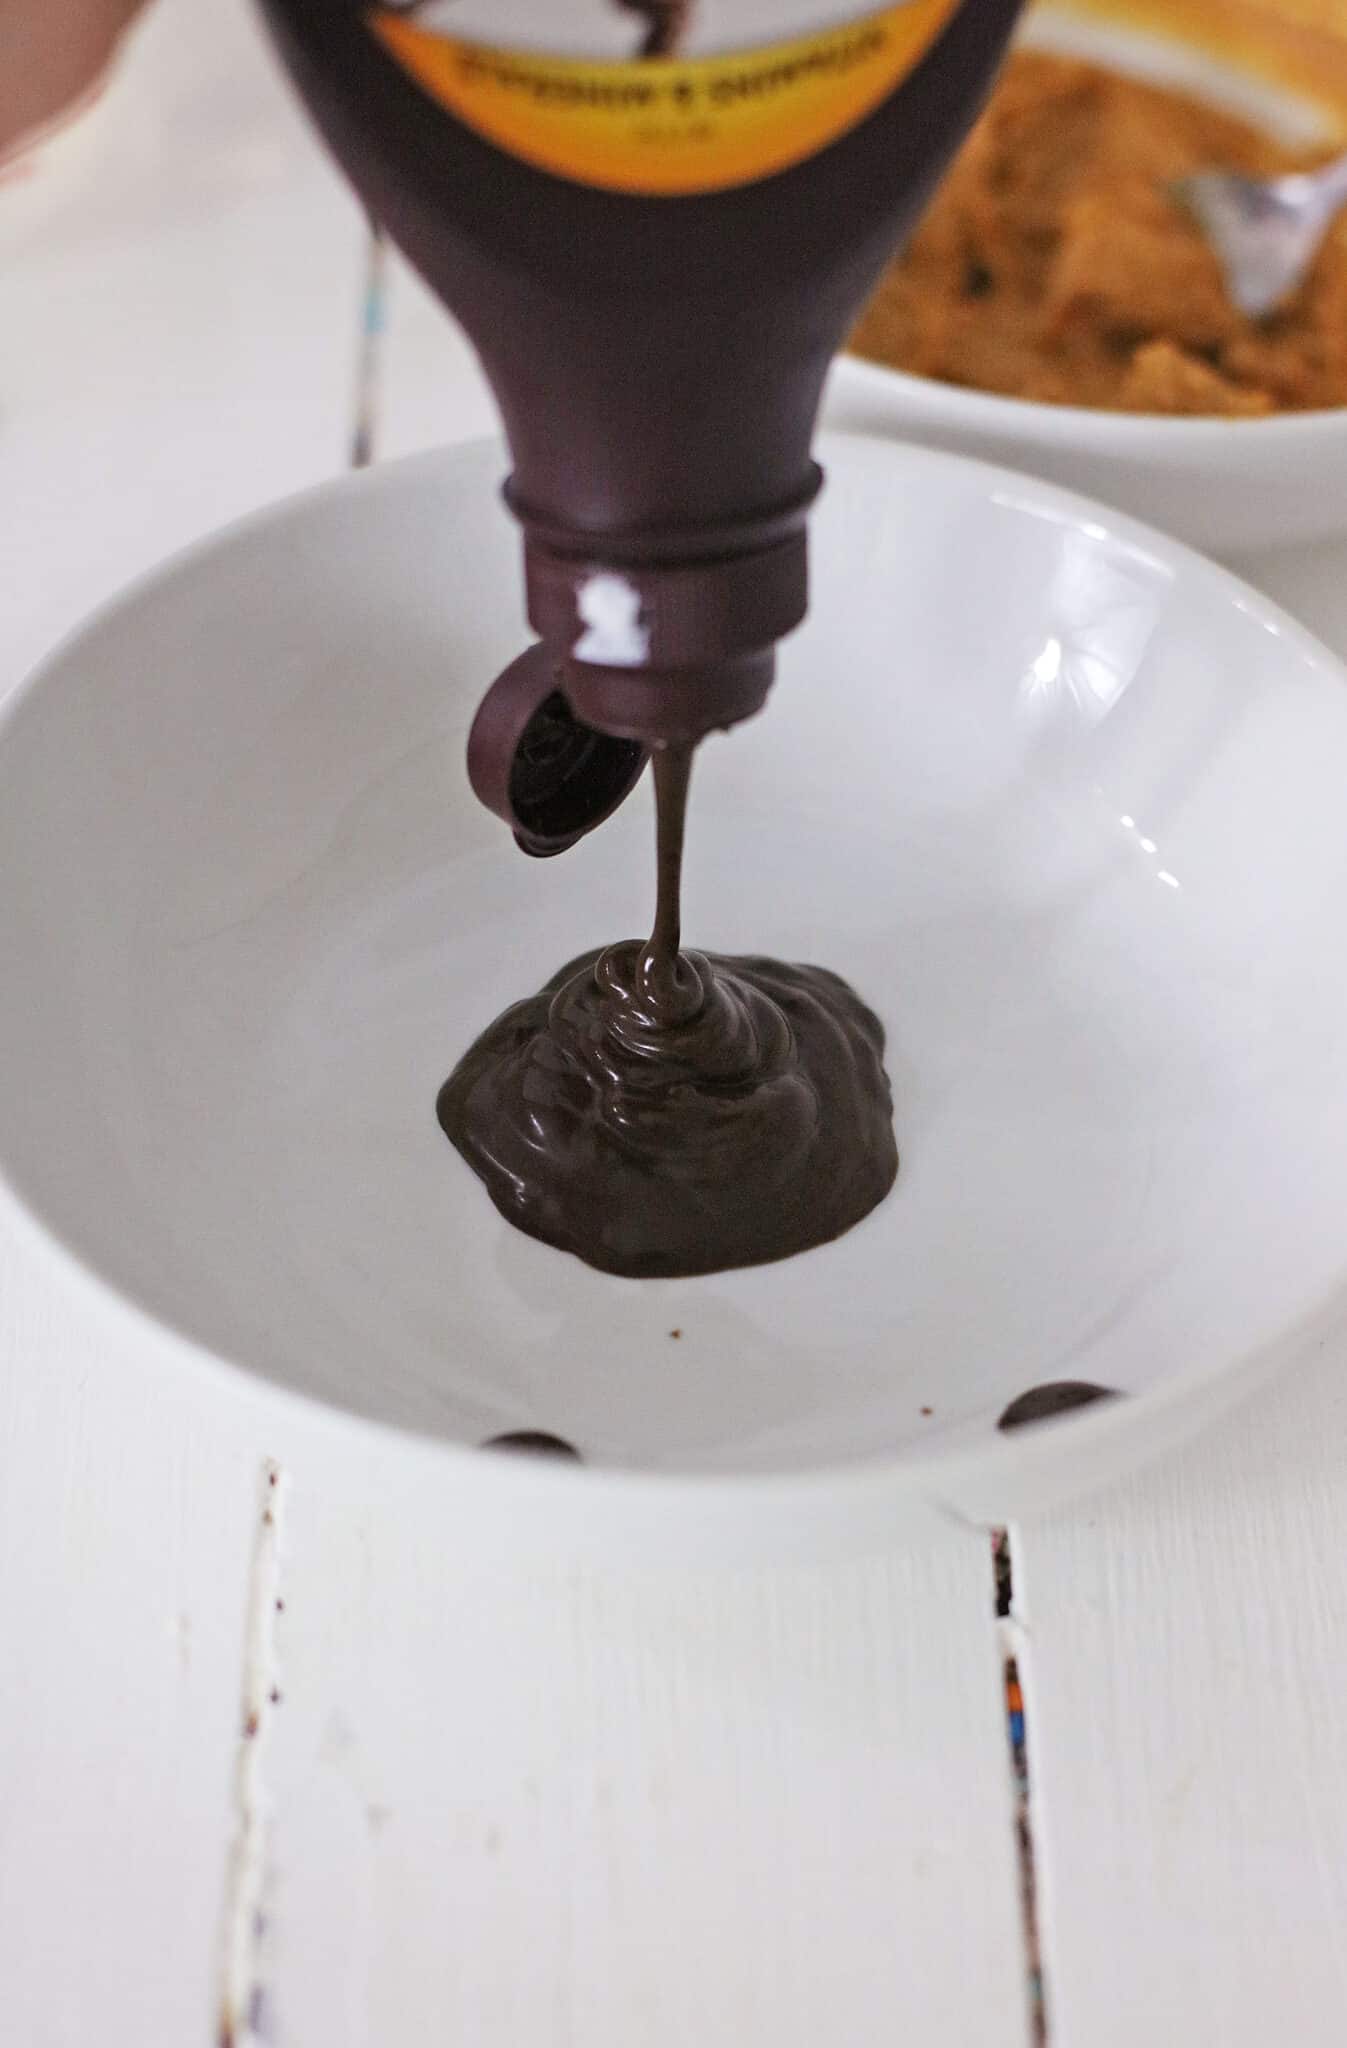 Adding the chocolate syrup.